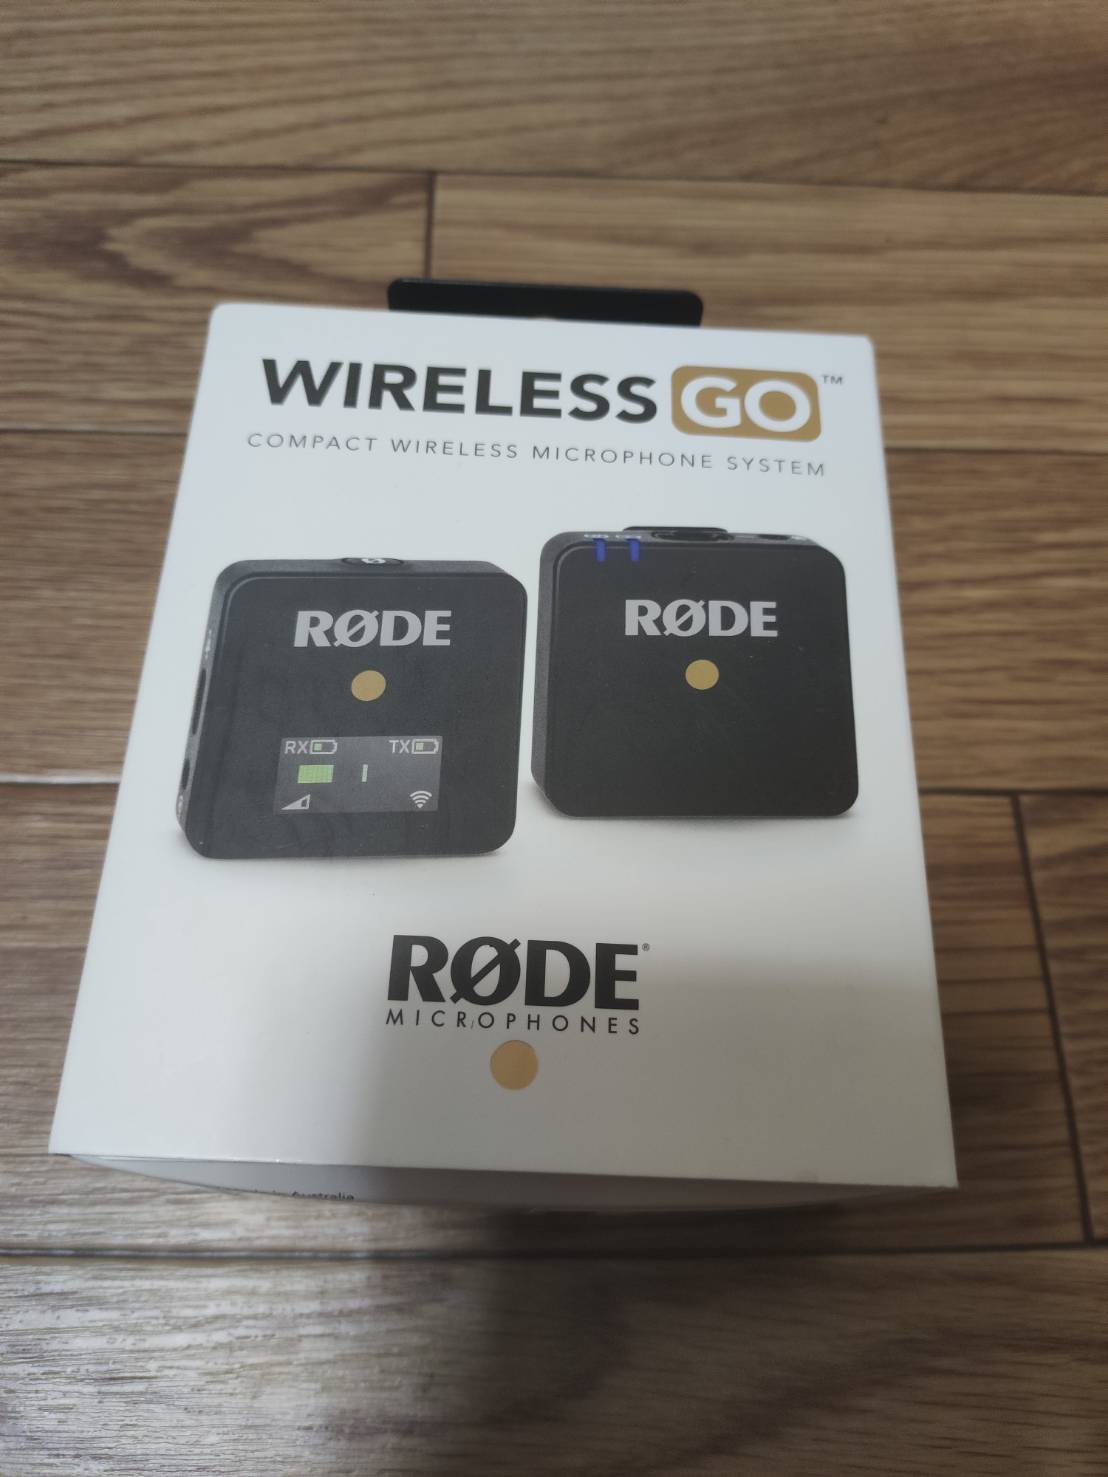 RODE Wireless Goレビュー！音質良好でおすすめワイヤレスマイク！